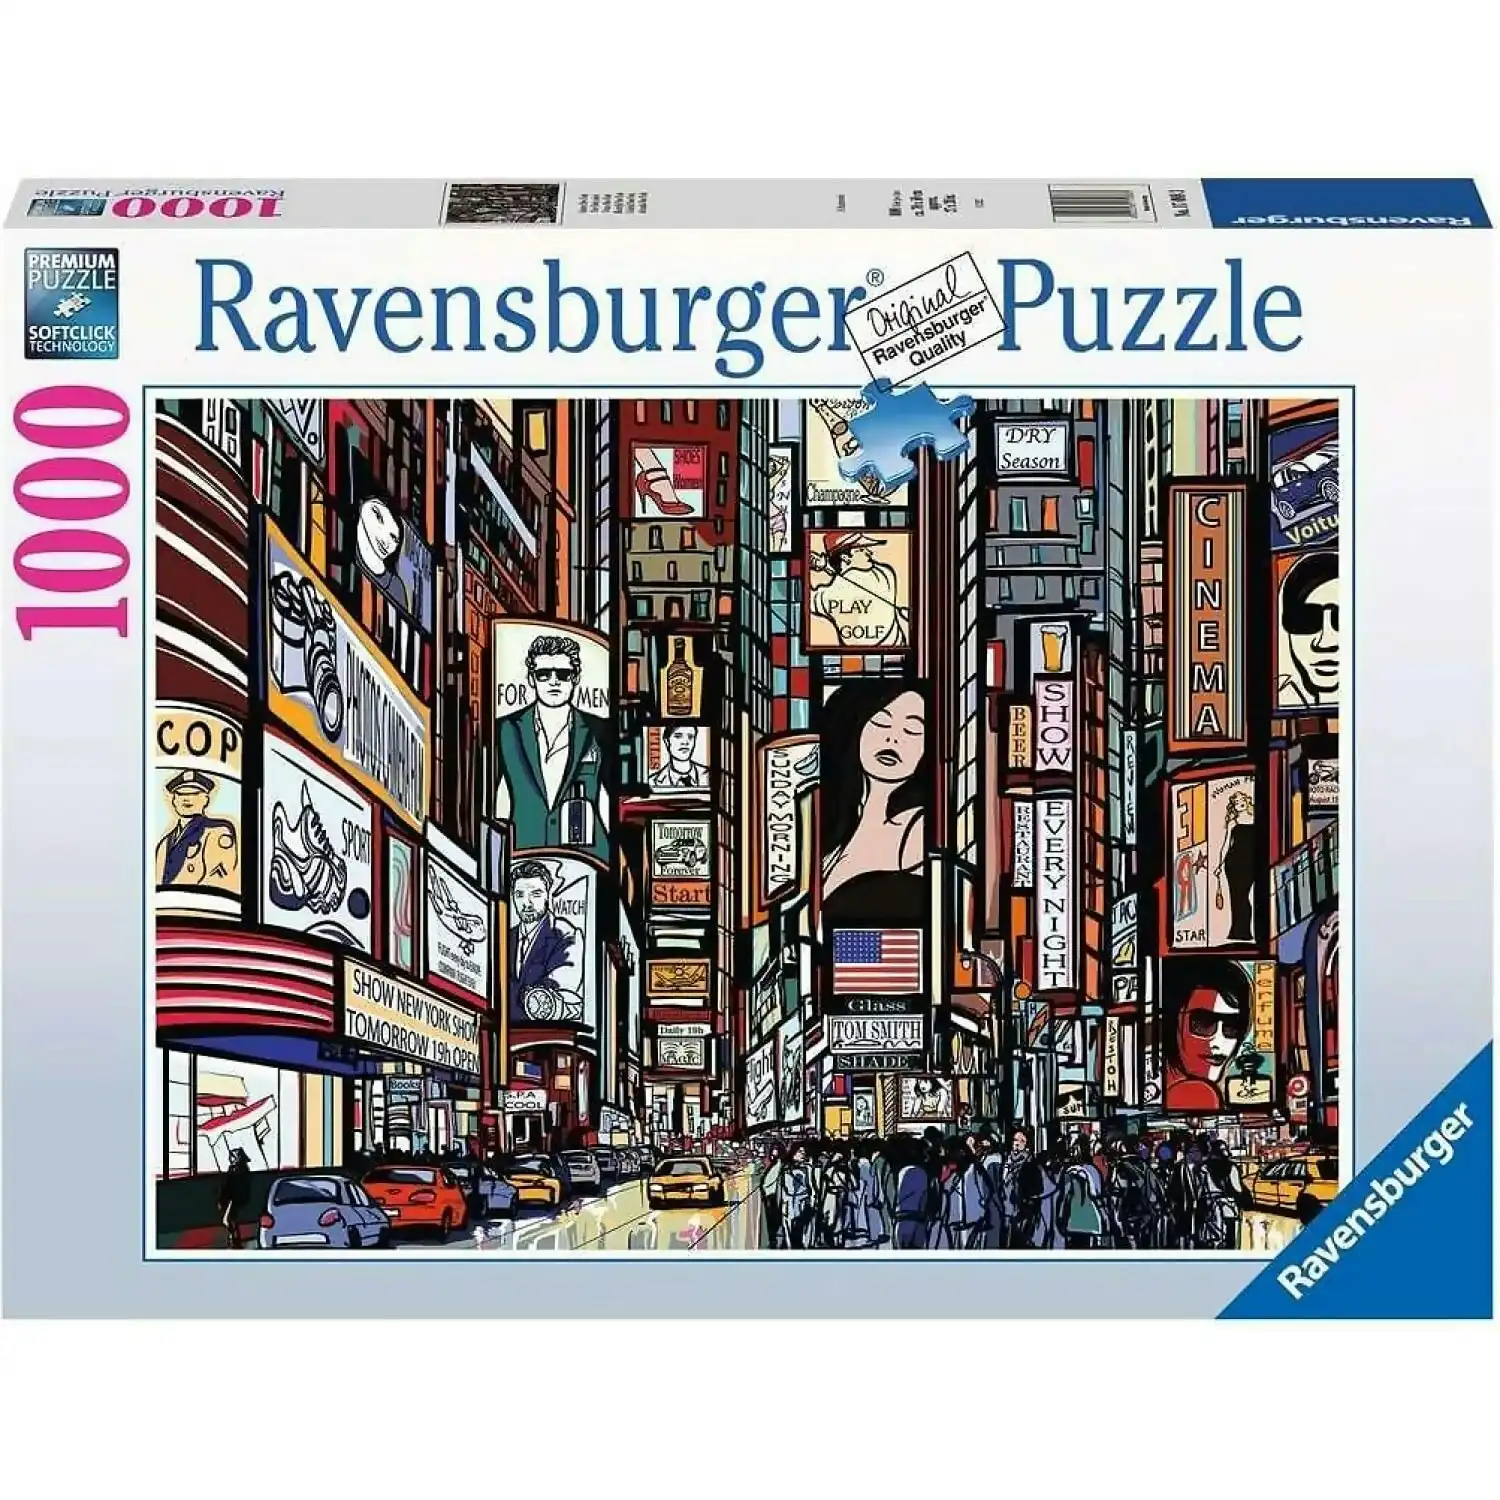 Ravensburger - Colourful New York Jigsaw Puzzle 1000pc